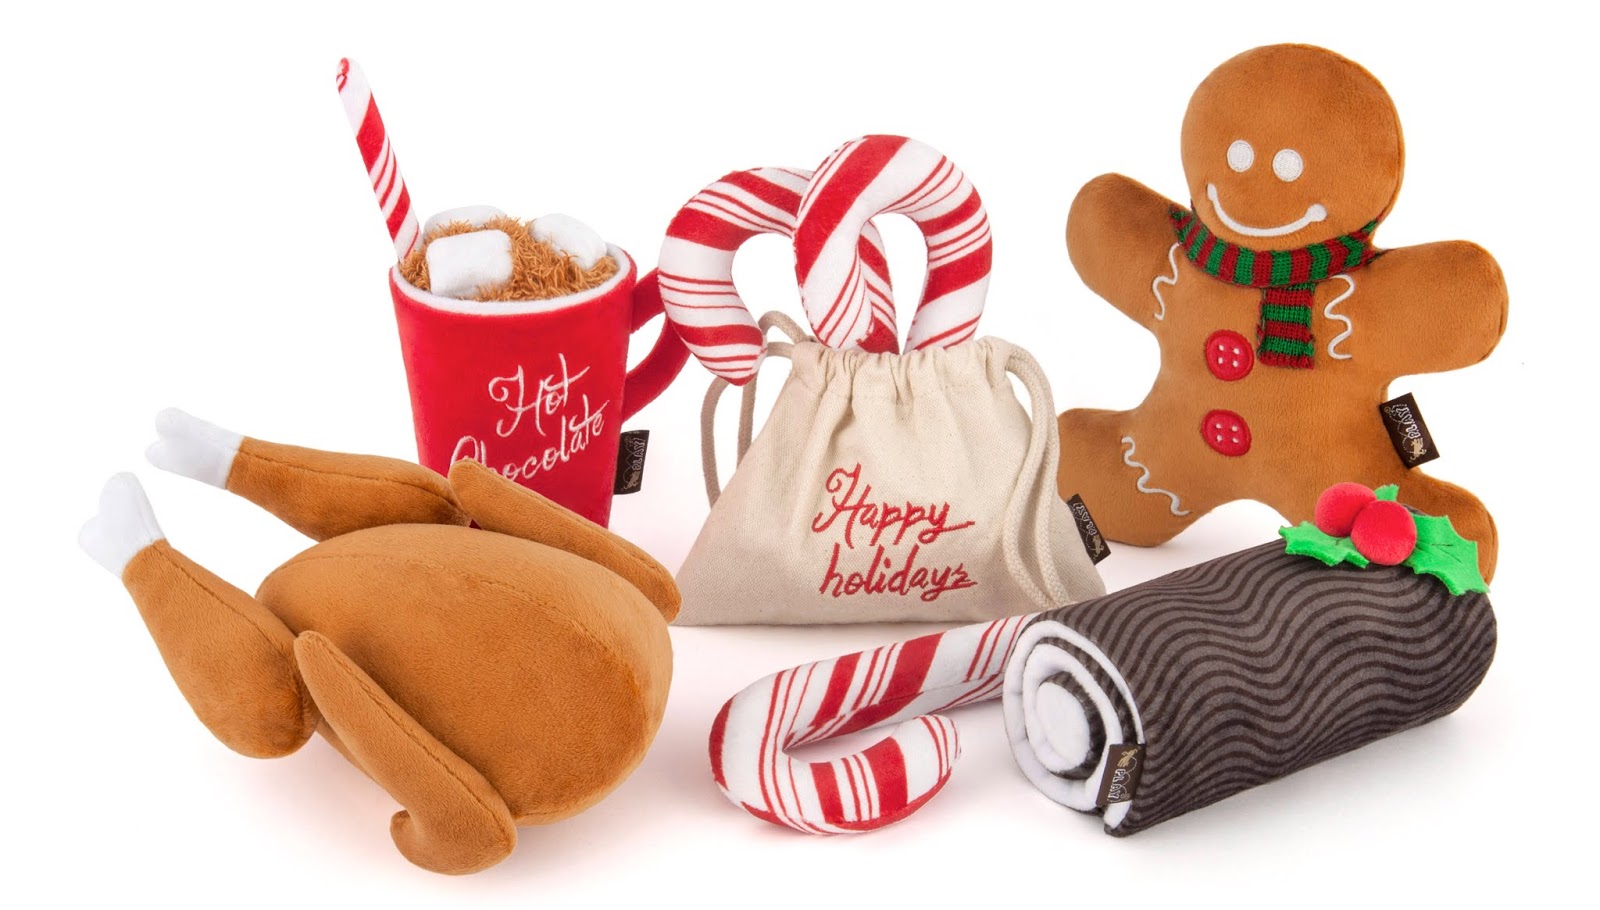 PLAY Holiday dog toys for Chrismas